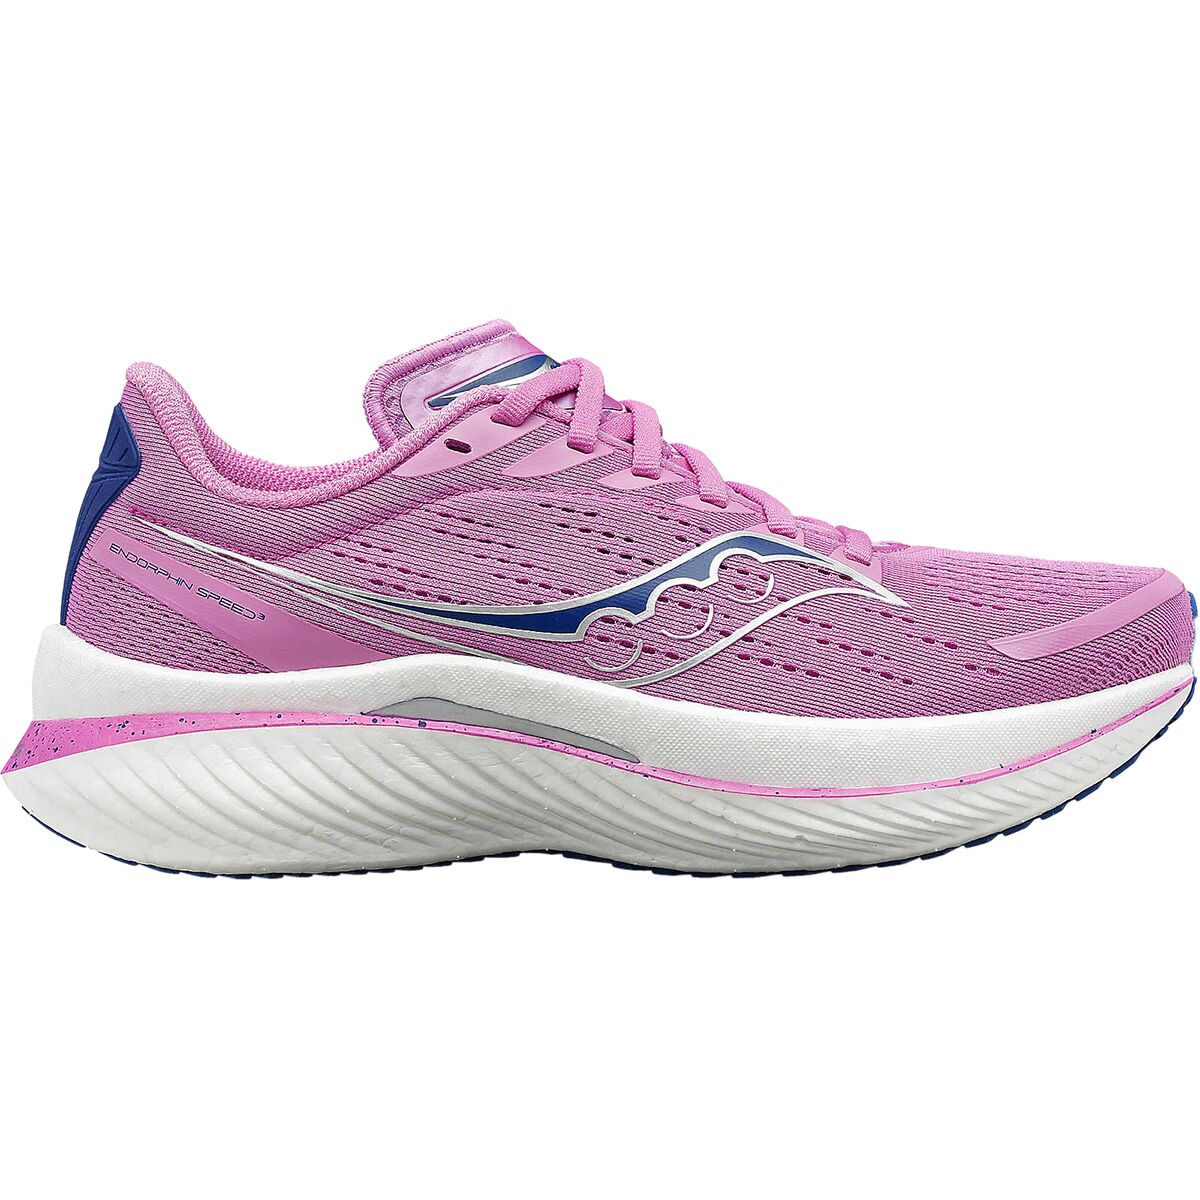 Endorphin Speed 3 Running Shoe - Women